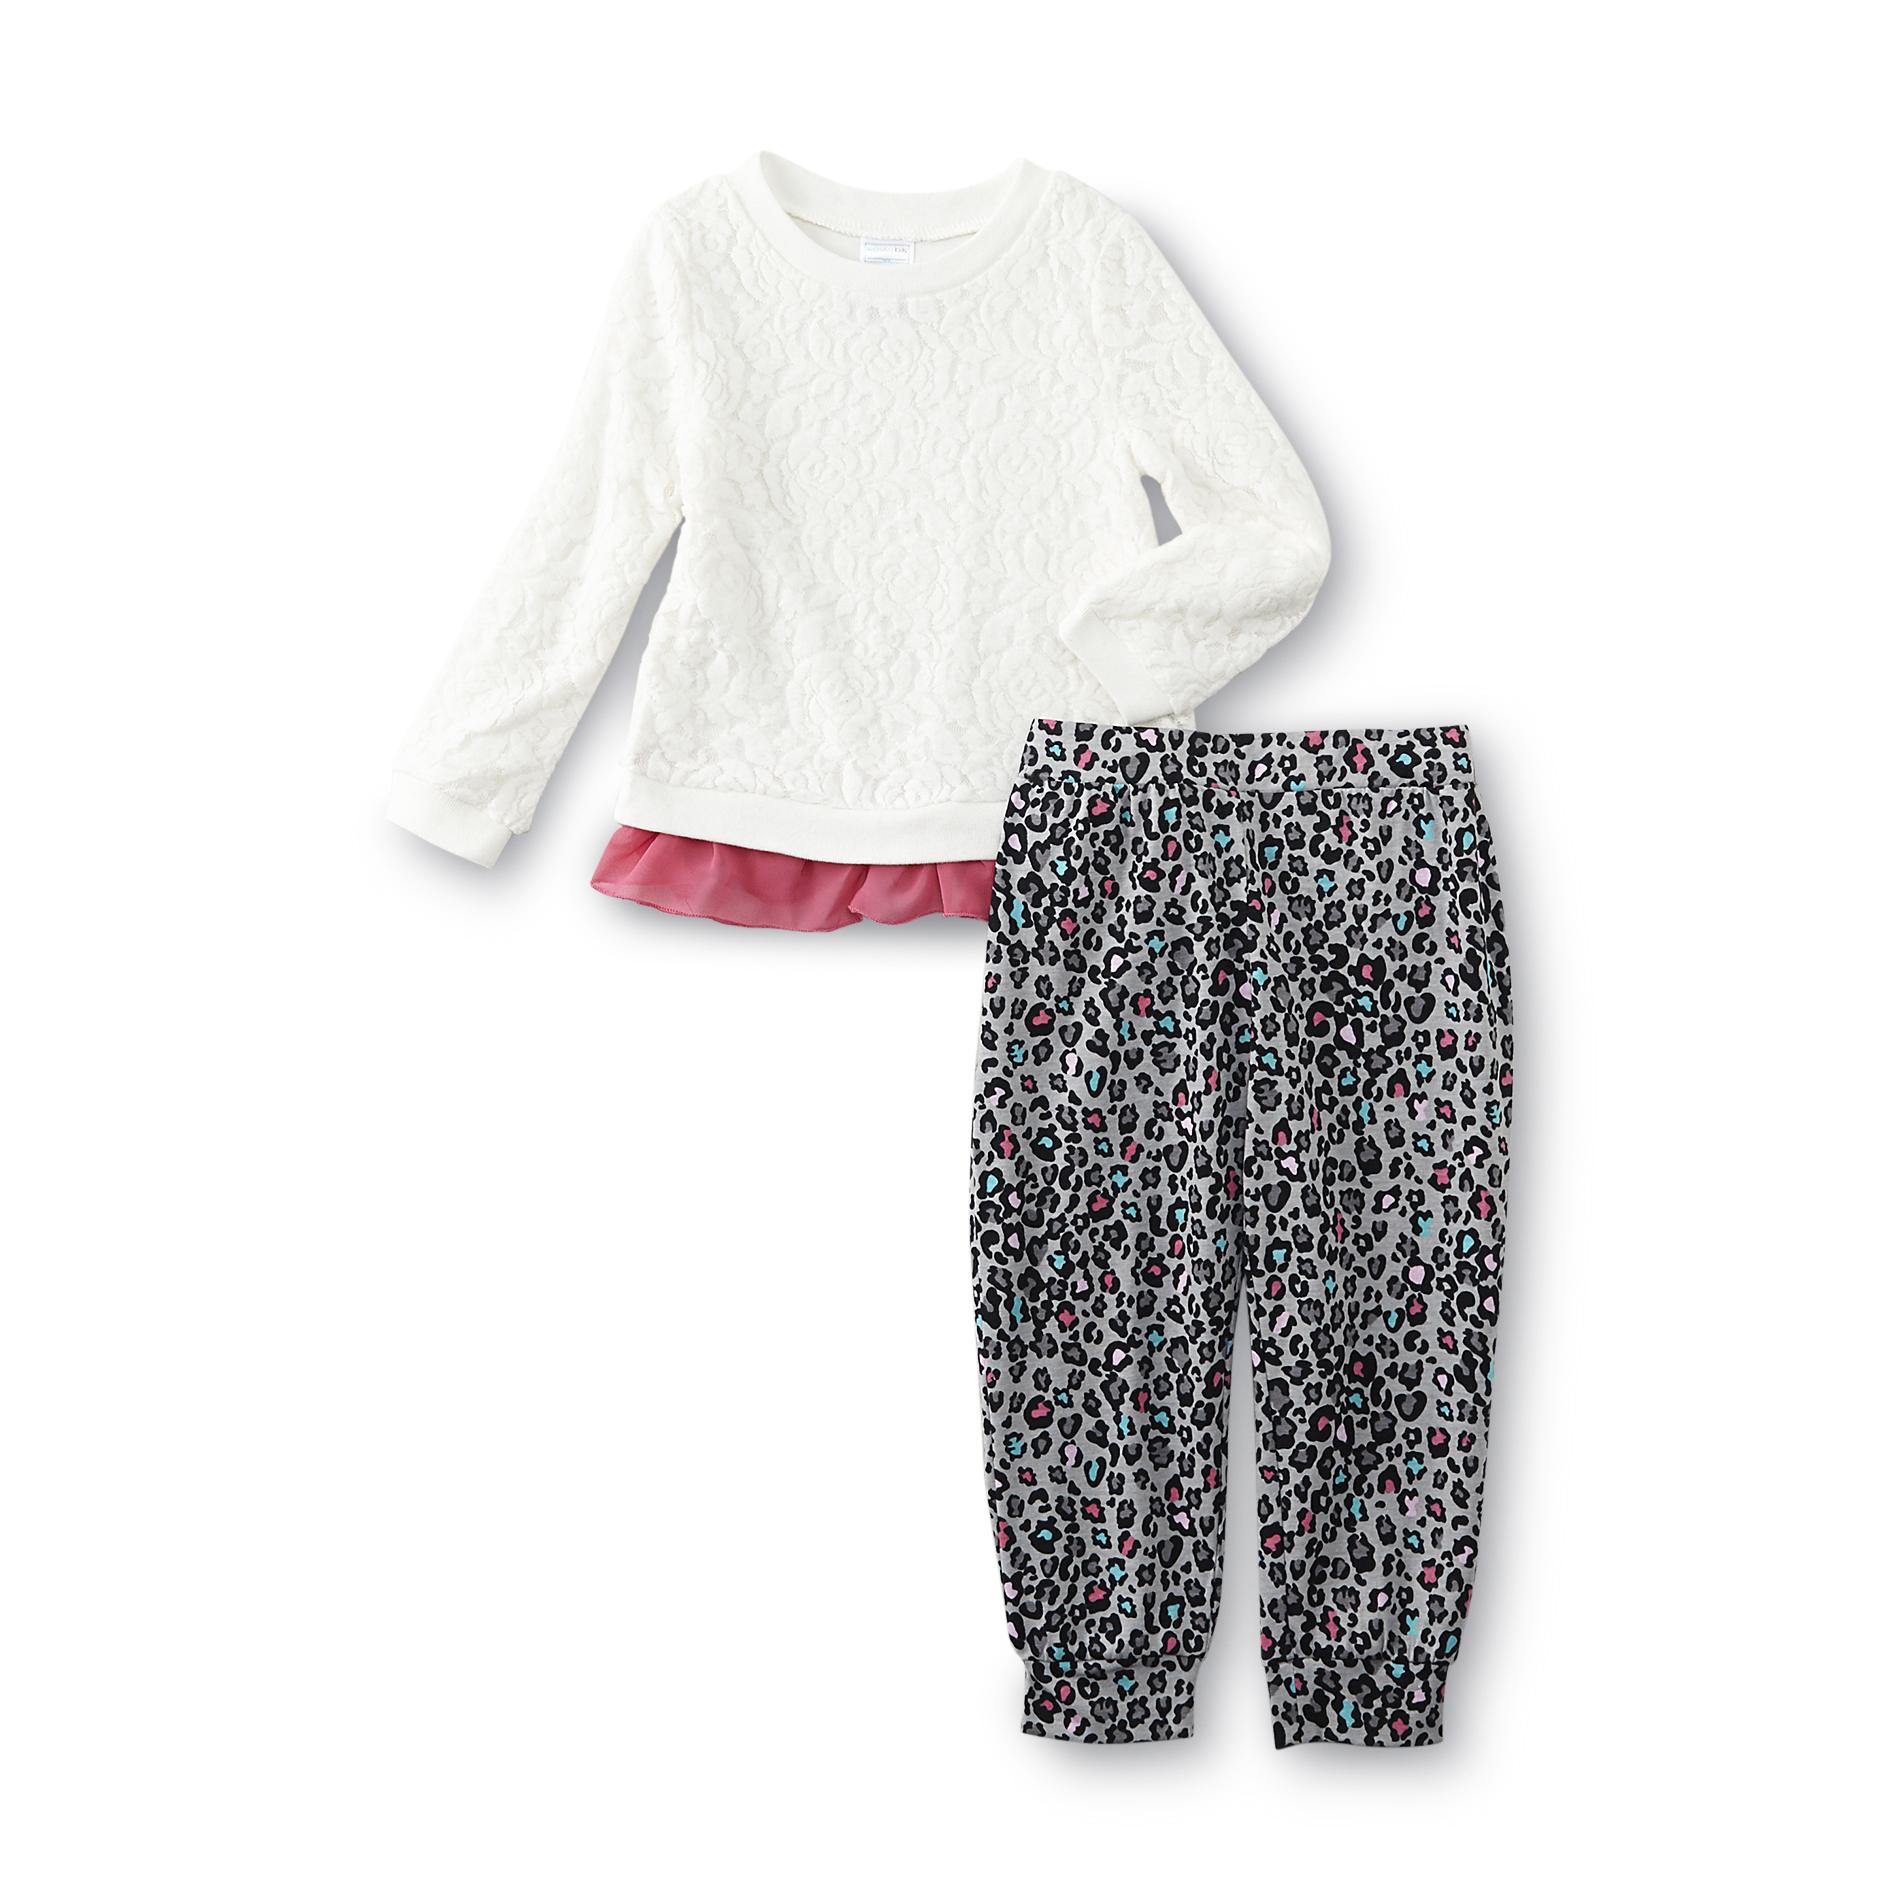 WonderKids Infant & Toddler Girl's Layered Look Shirt & Leggings - Lace & Leopard Print